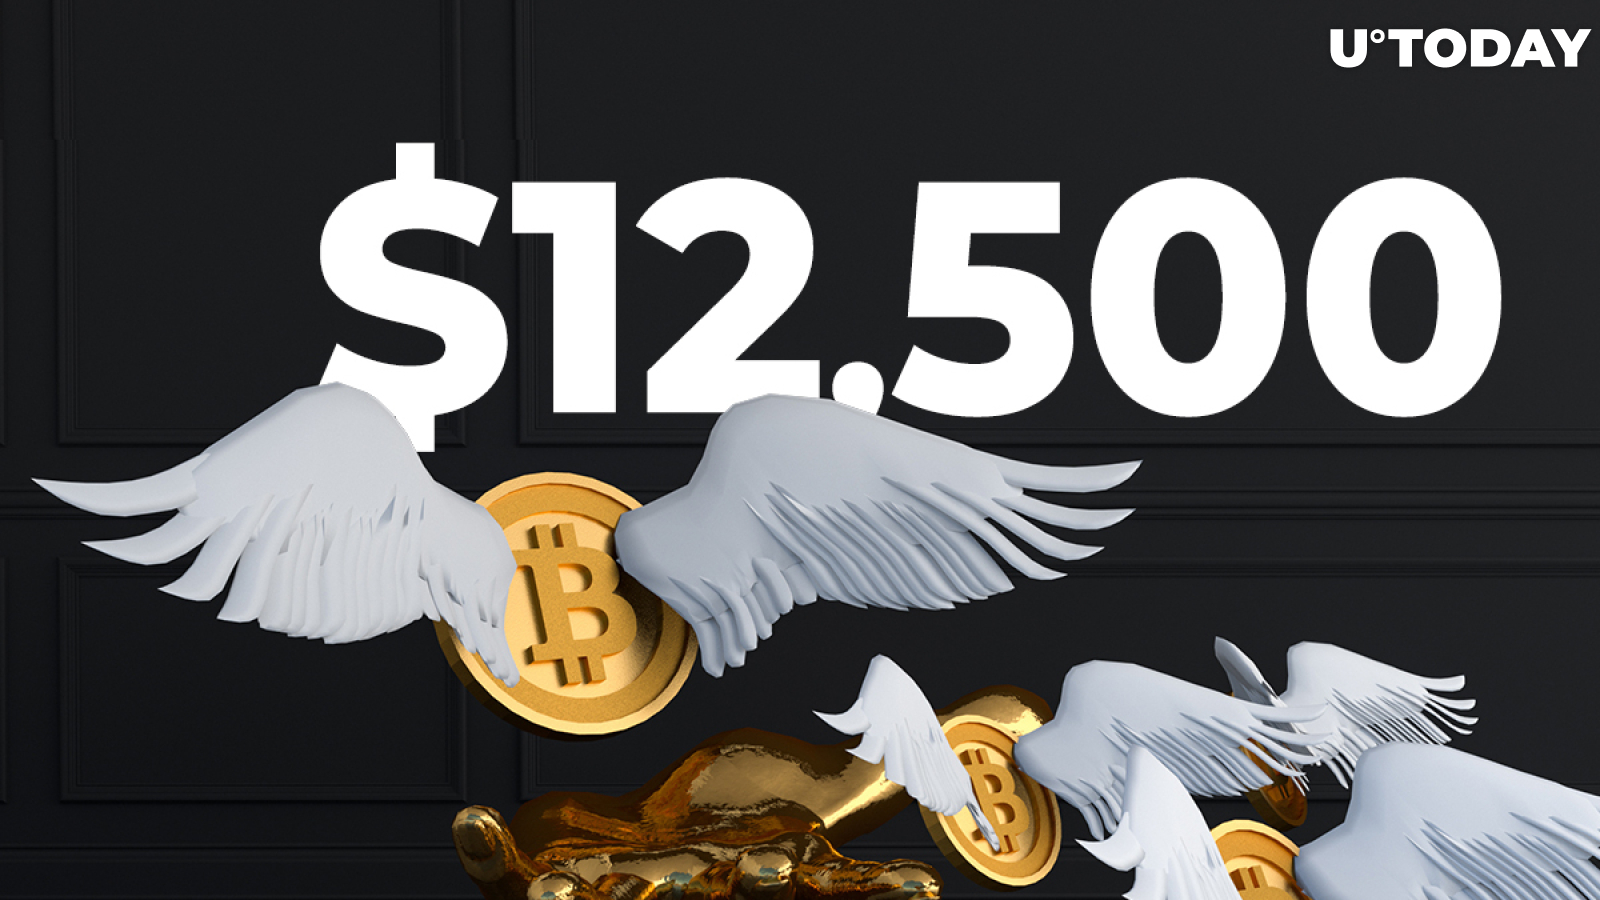 Bitcoin Price Forming Bullish Ascending Triangle Pattern, Targeting $12,500